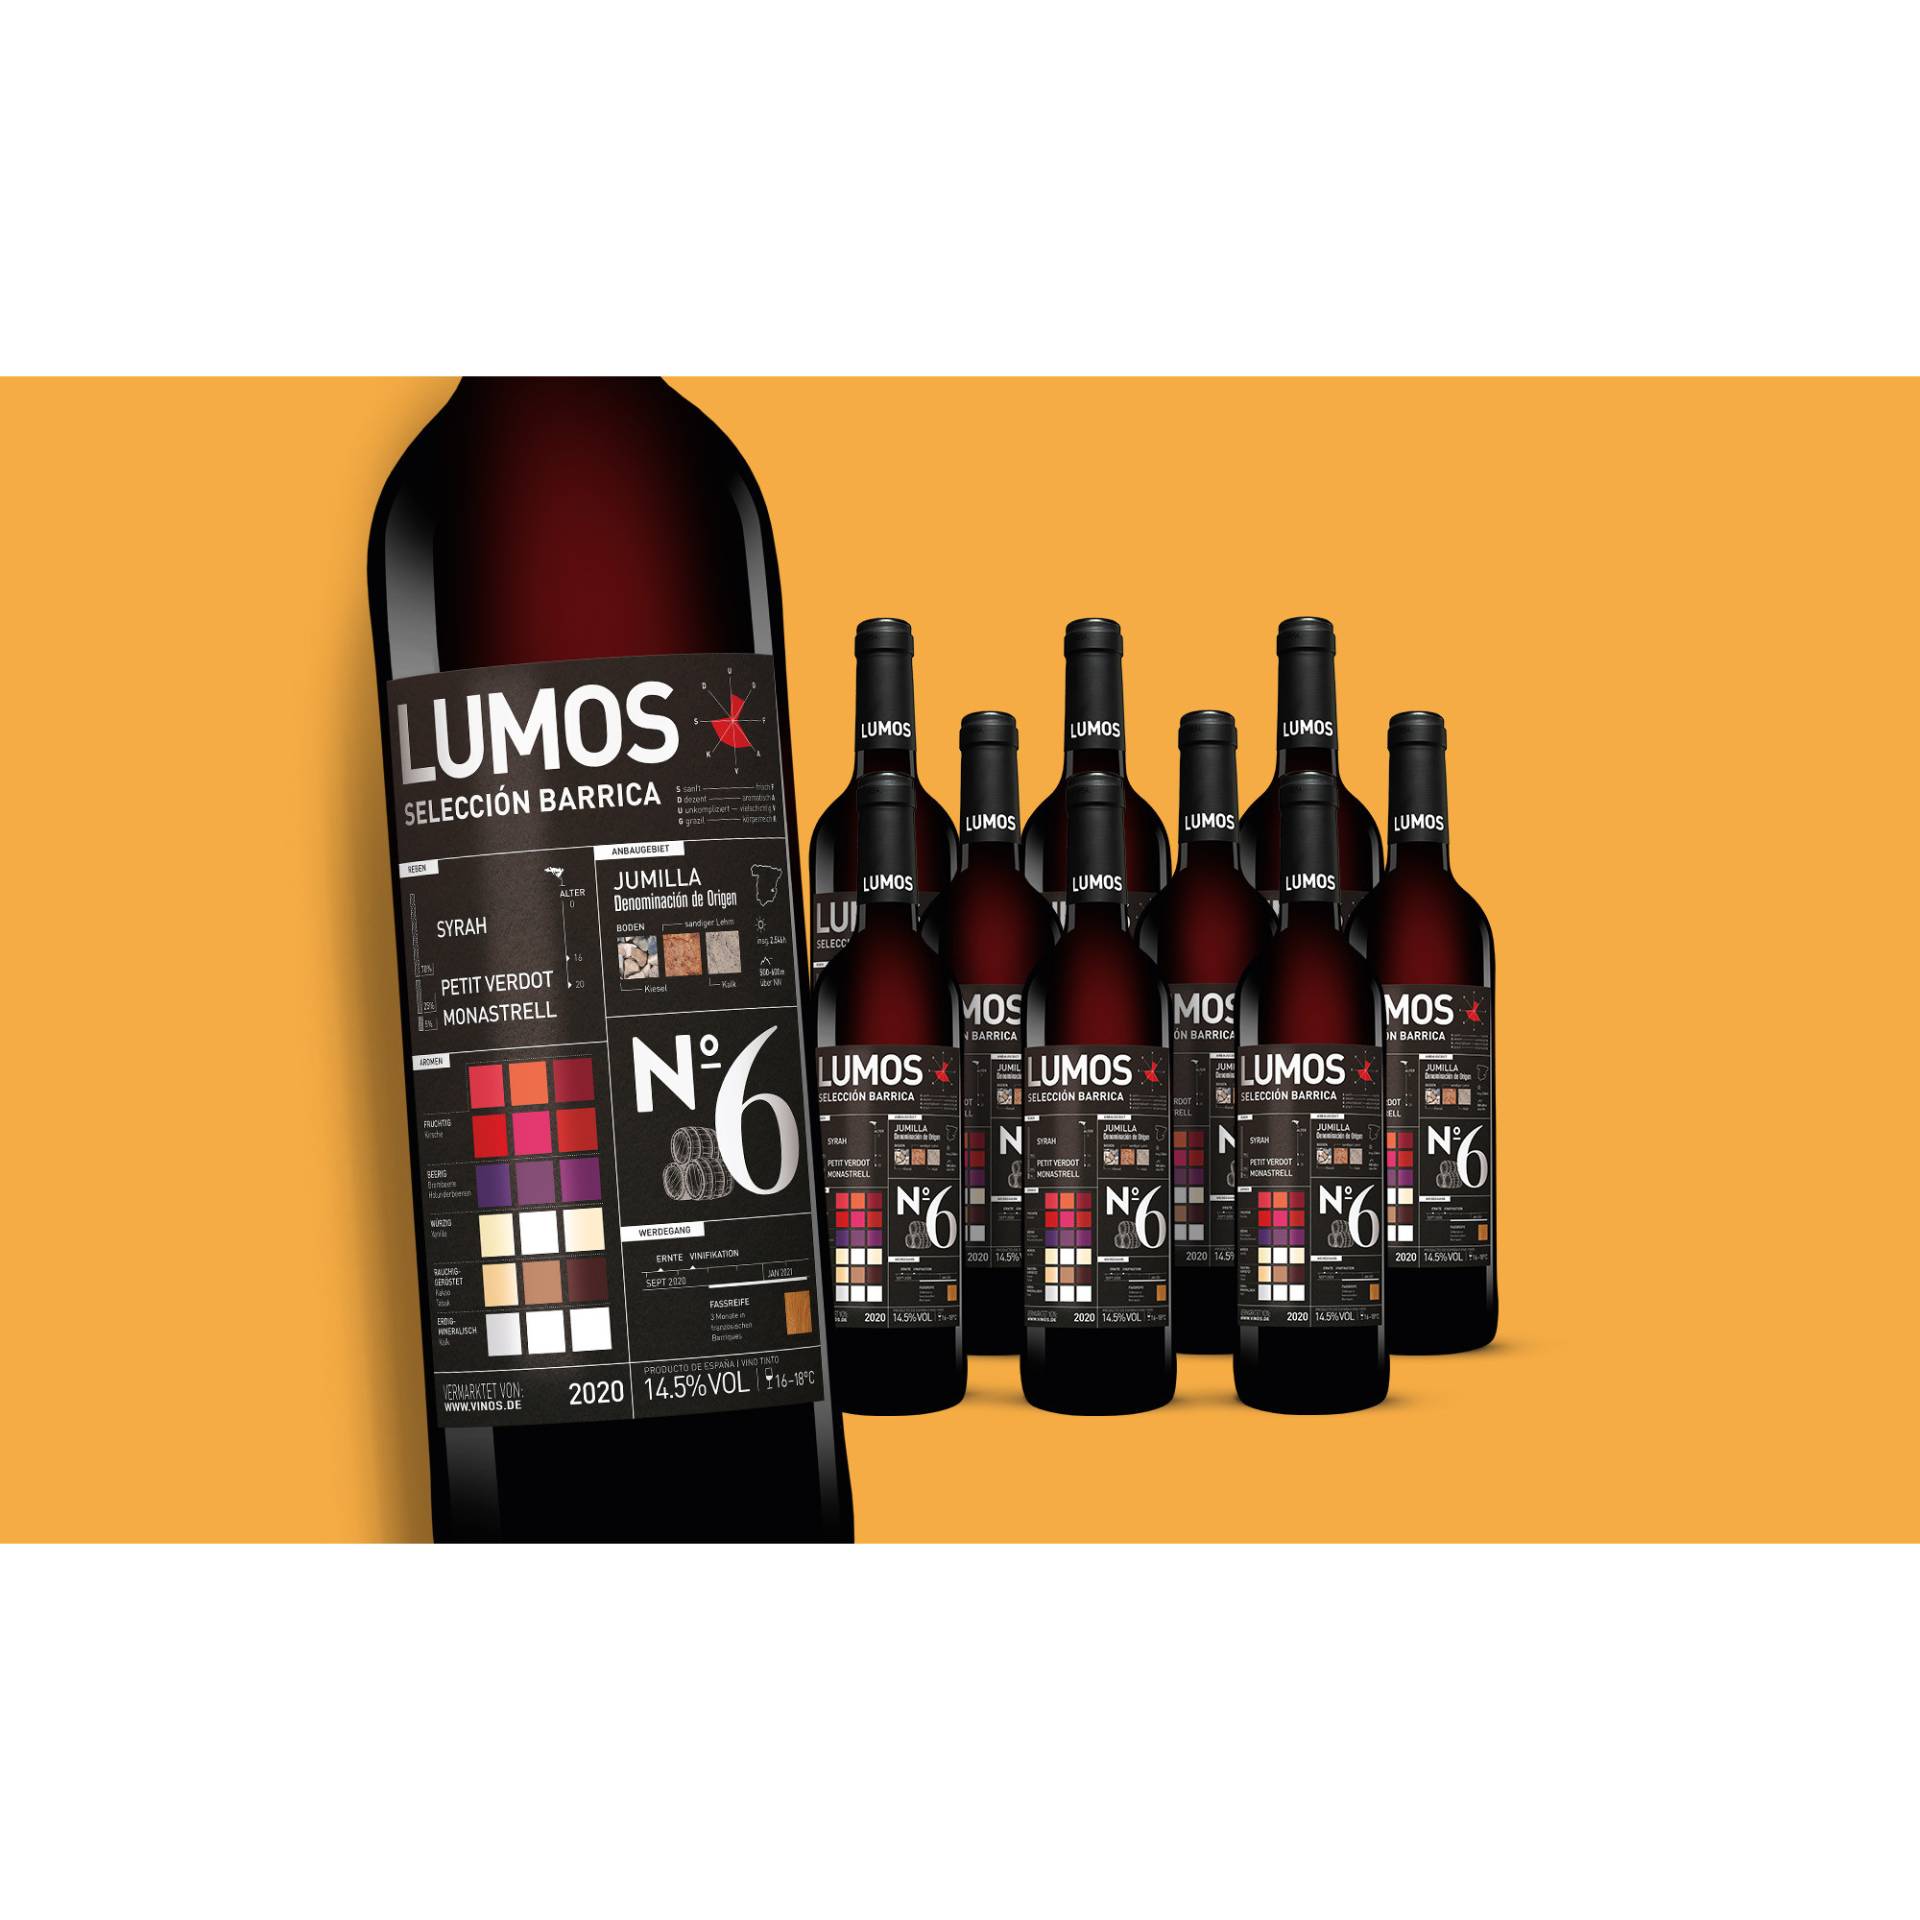 LUMOS No.6 Selección Barrica 2020  7.5L 14.5% Vol. Weinpaket aus Spanien von Das Lumos-Projekt